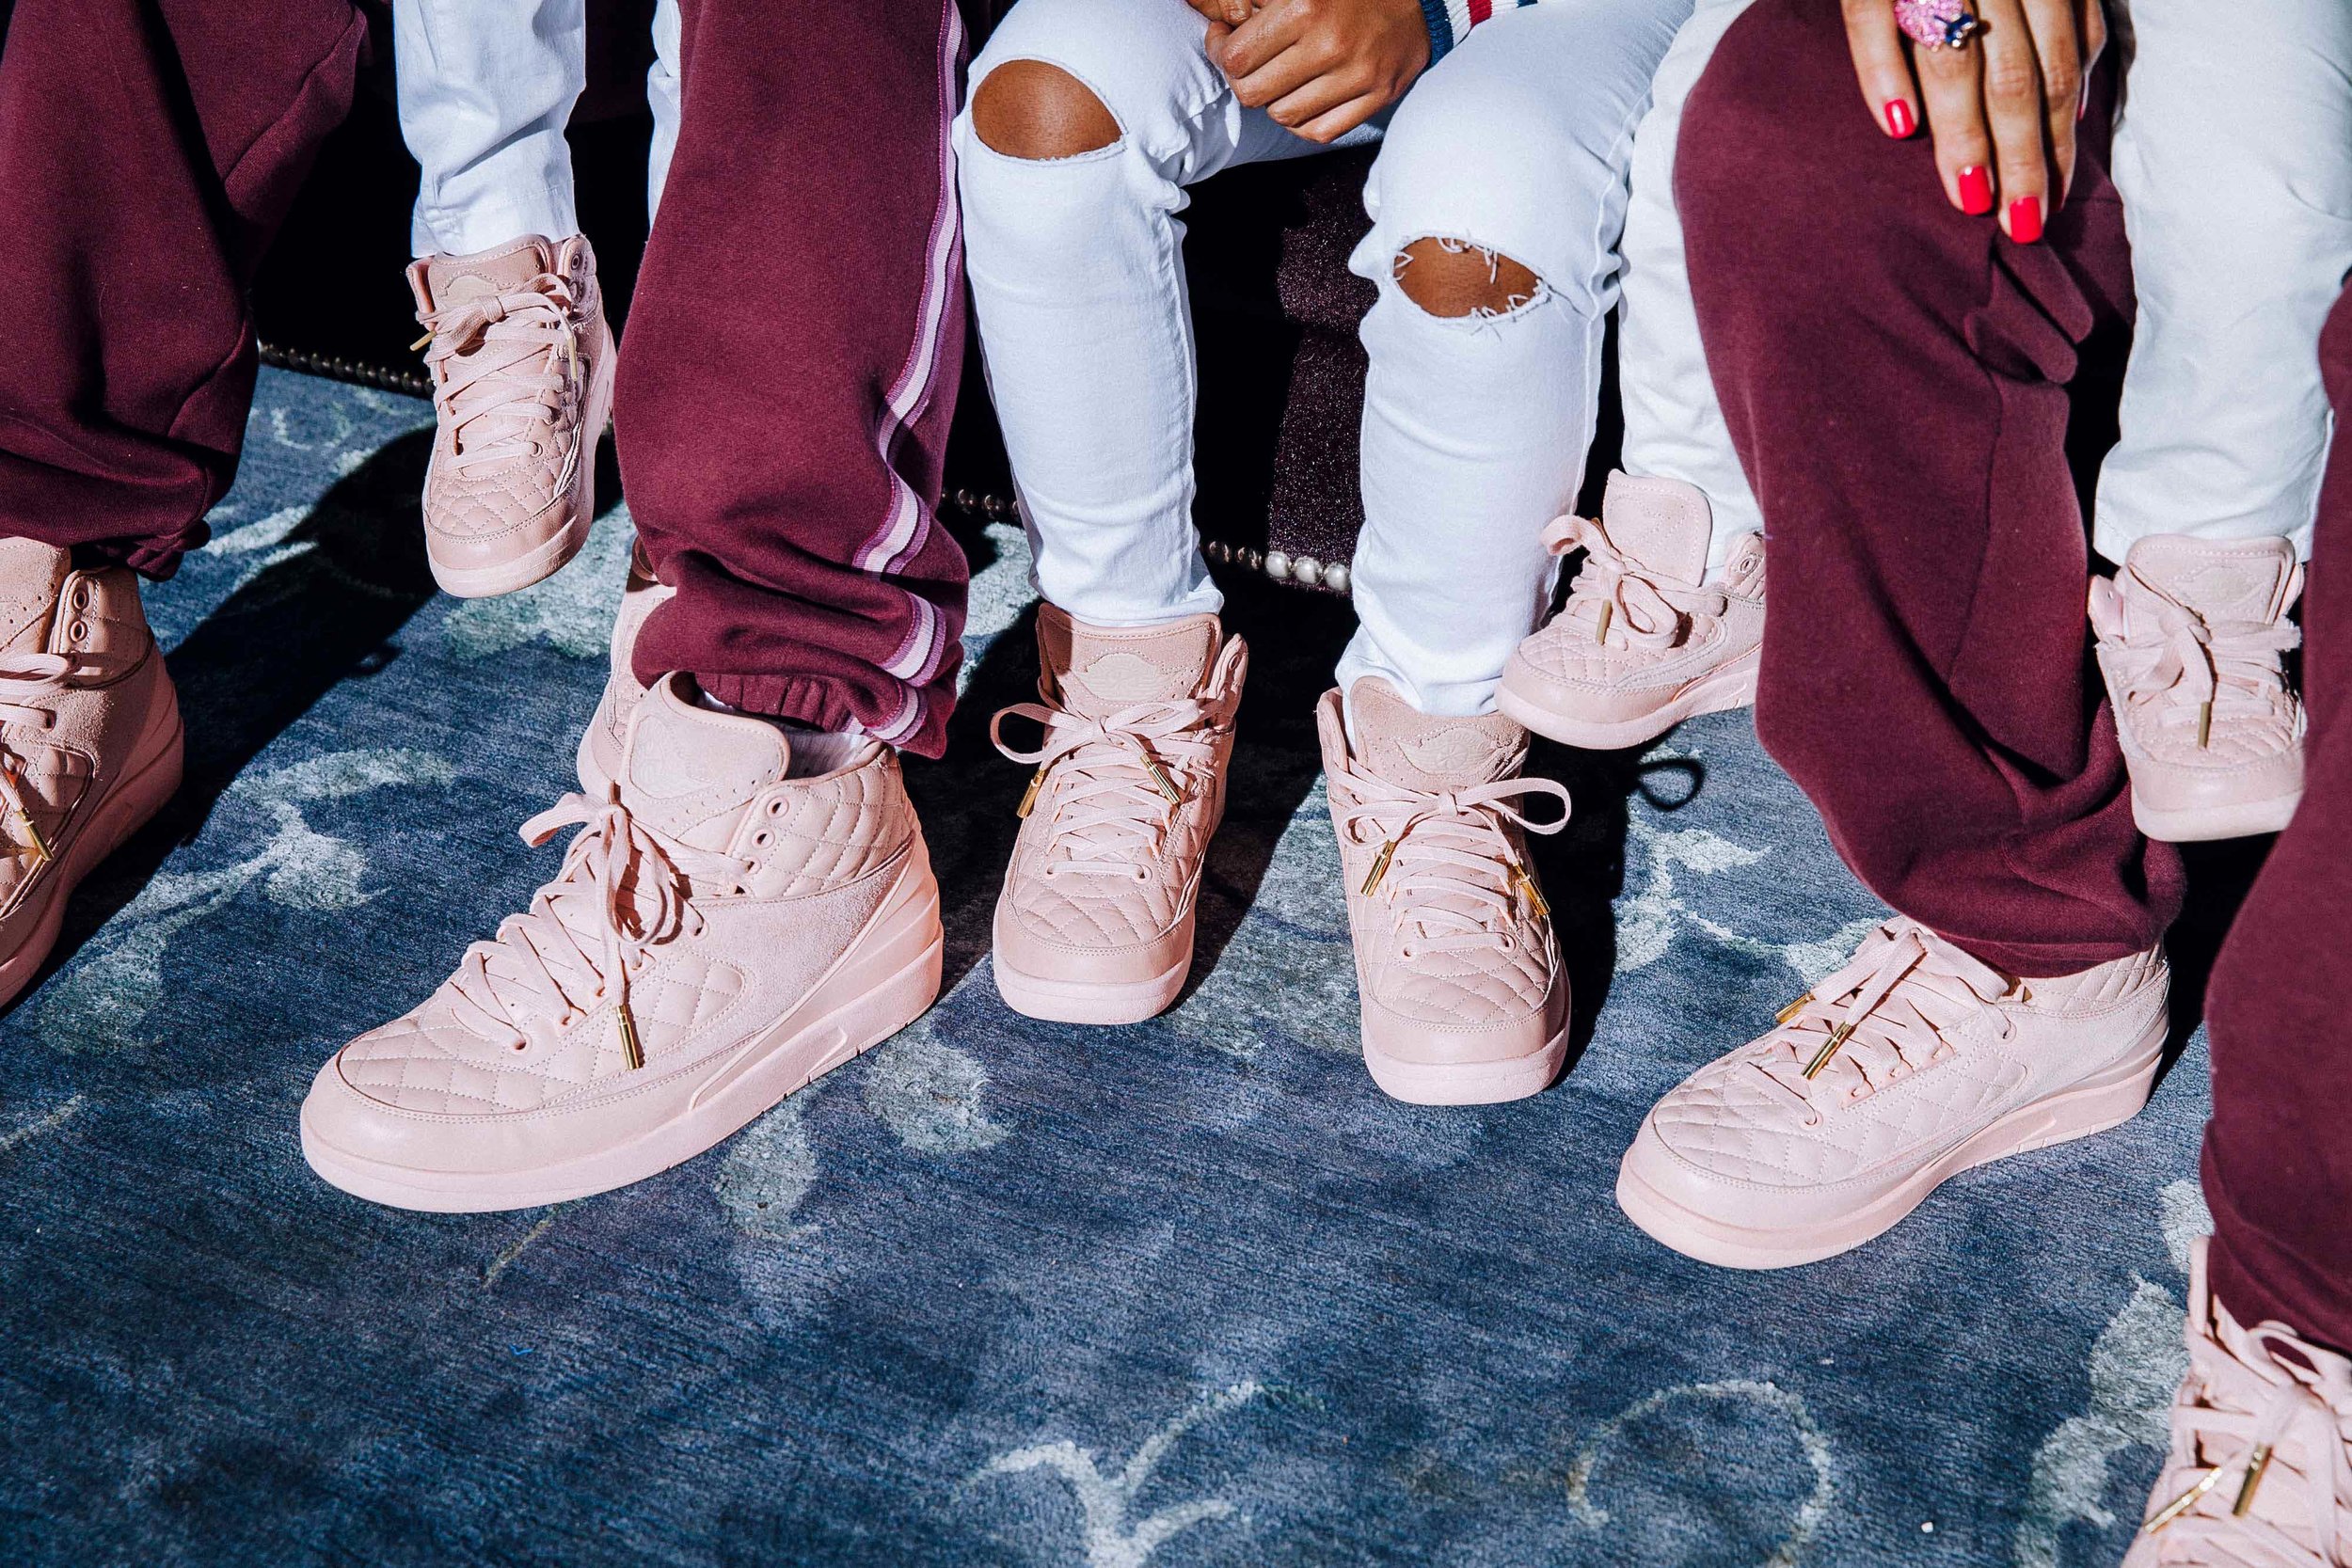 family matching jordans shoes